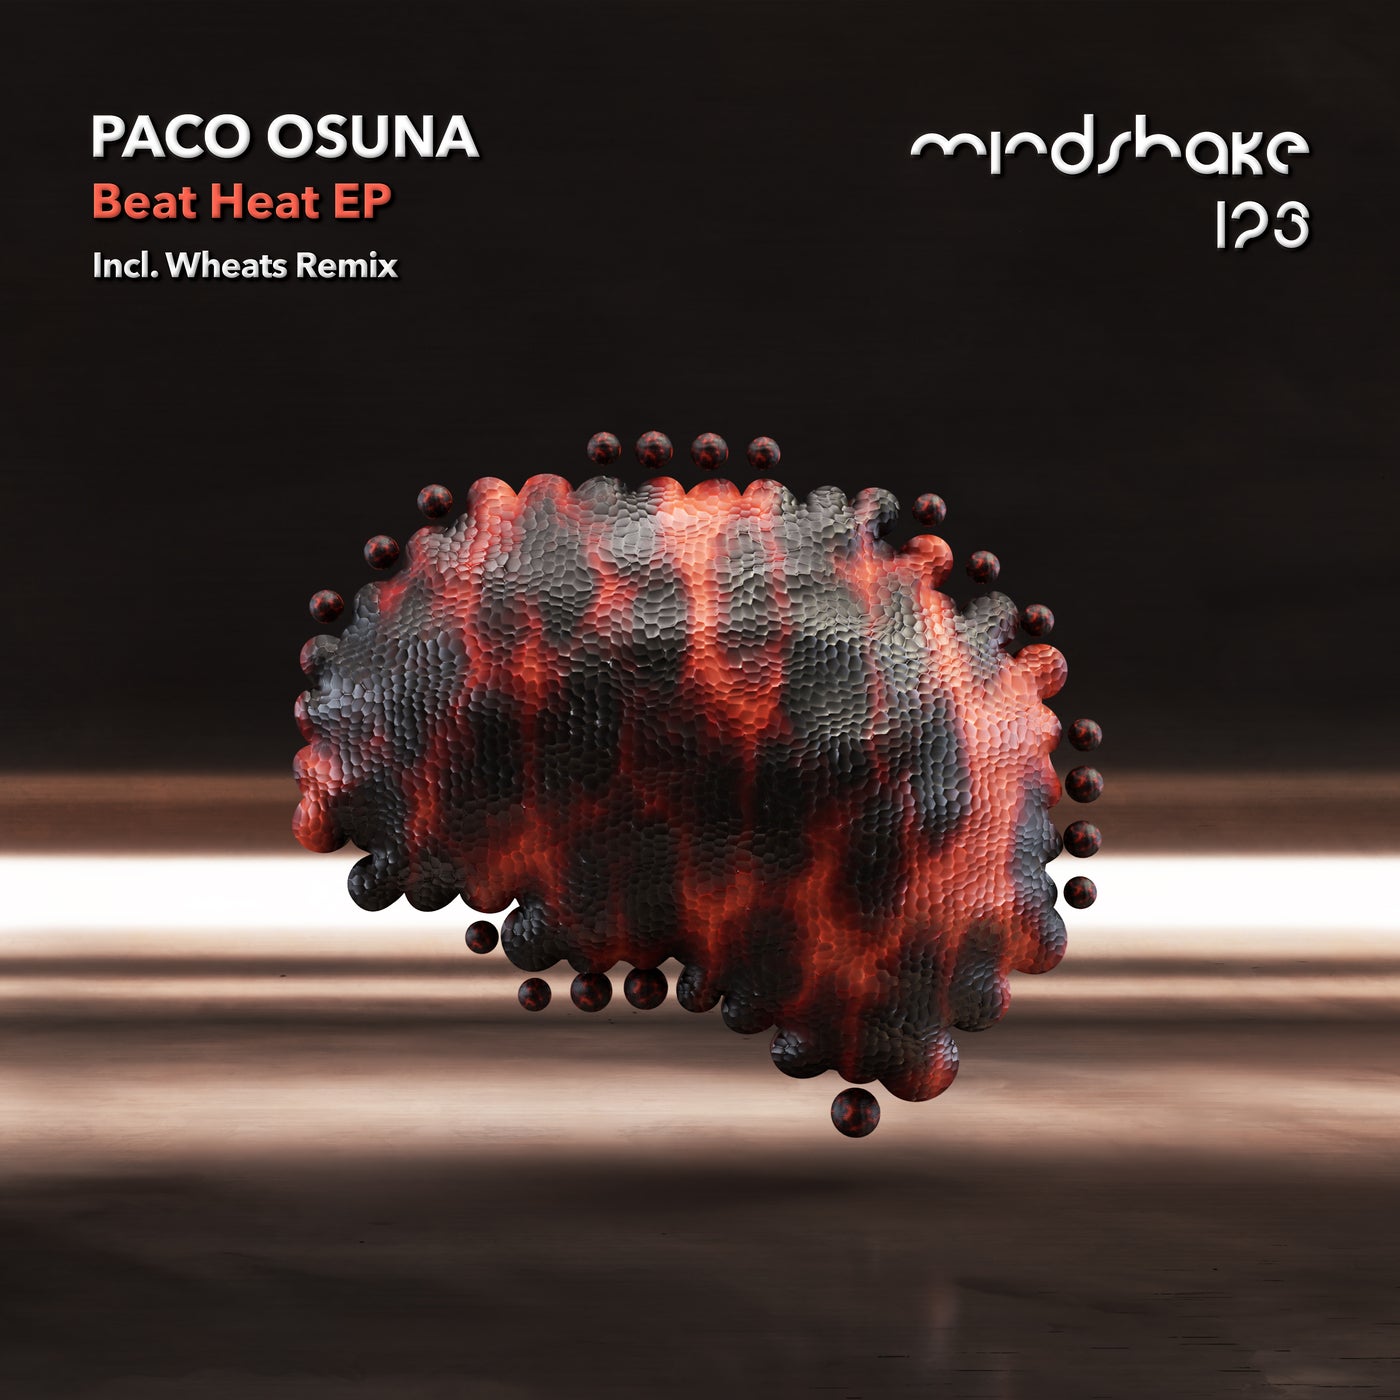 image cover: Paco Osuna - Beat Heat EP on Mindshake Records